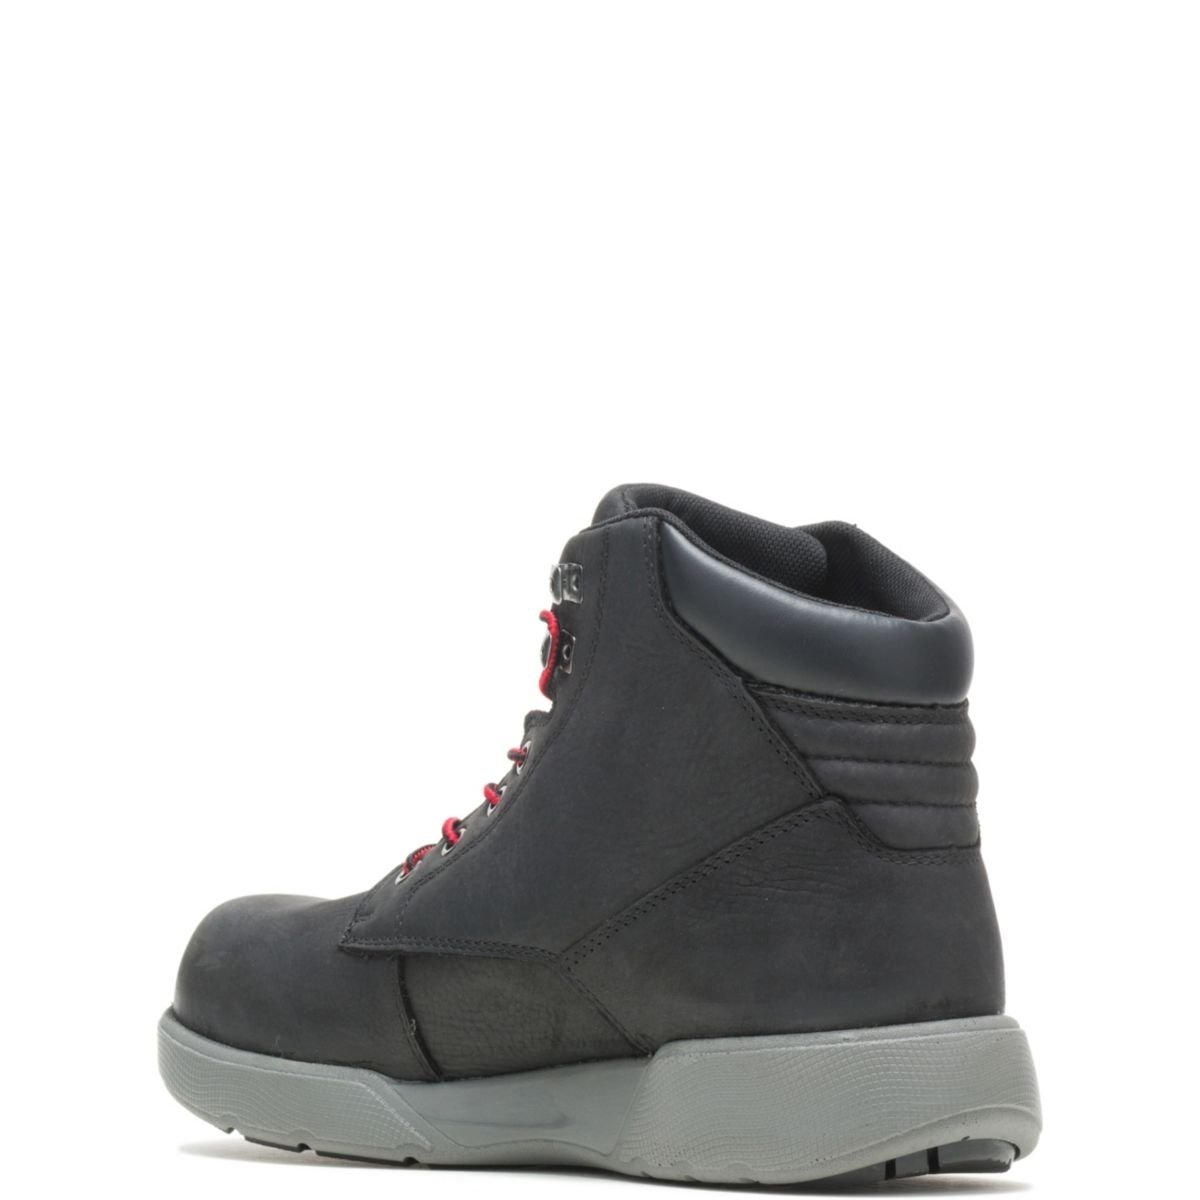 WOLVERINE Men's Kickstart 6 DuraShocksÂ® CarbonMAXÂ® Composite Toe Work Boot Black - W211116 BLACK - BLACK, 10